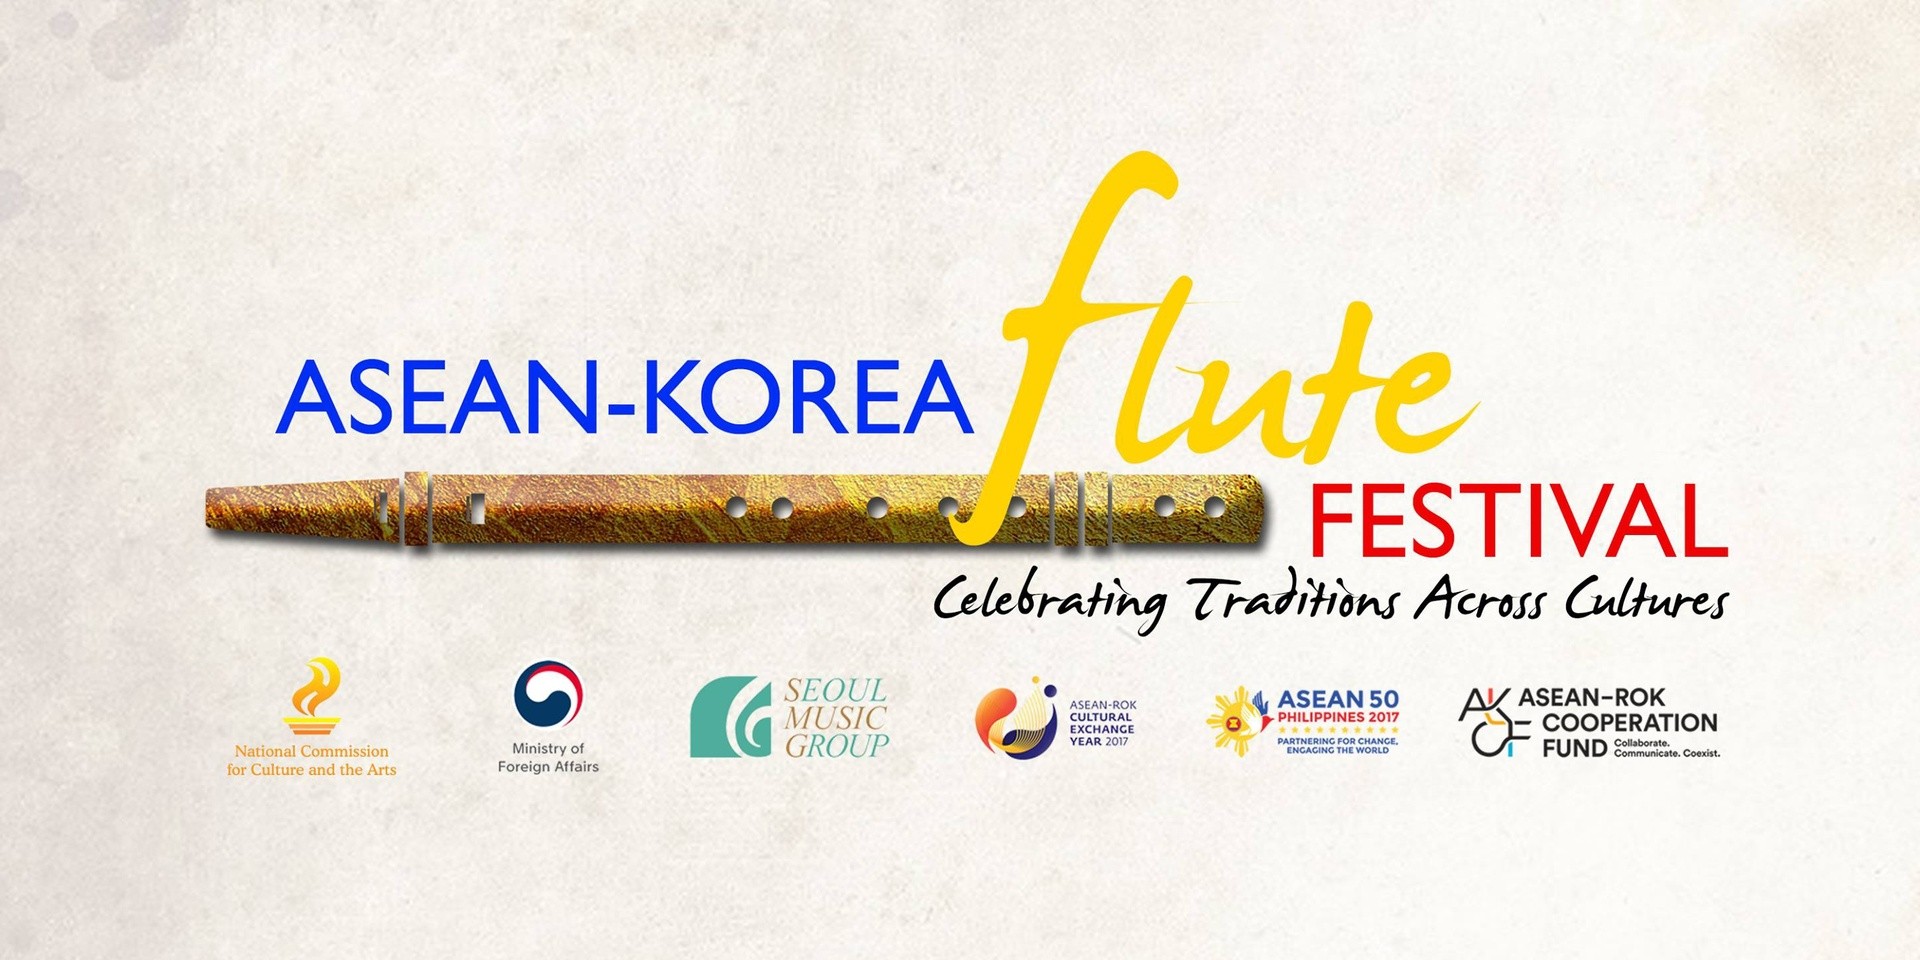 ASEAN-KOREA Flute Festival kicks off in Manila this week